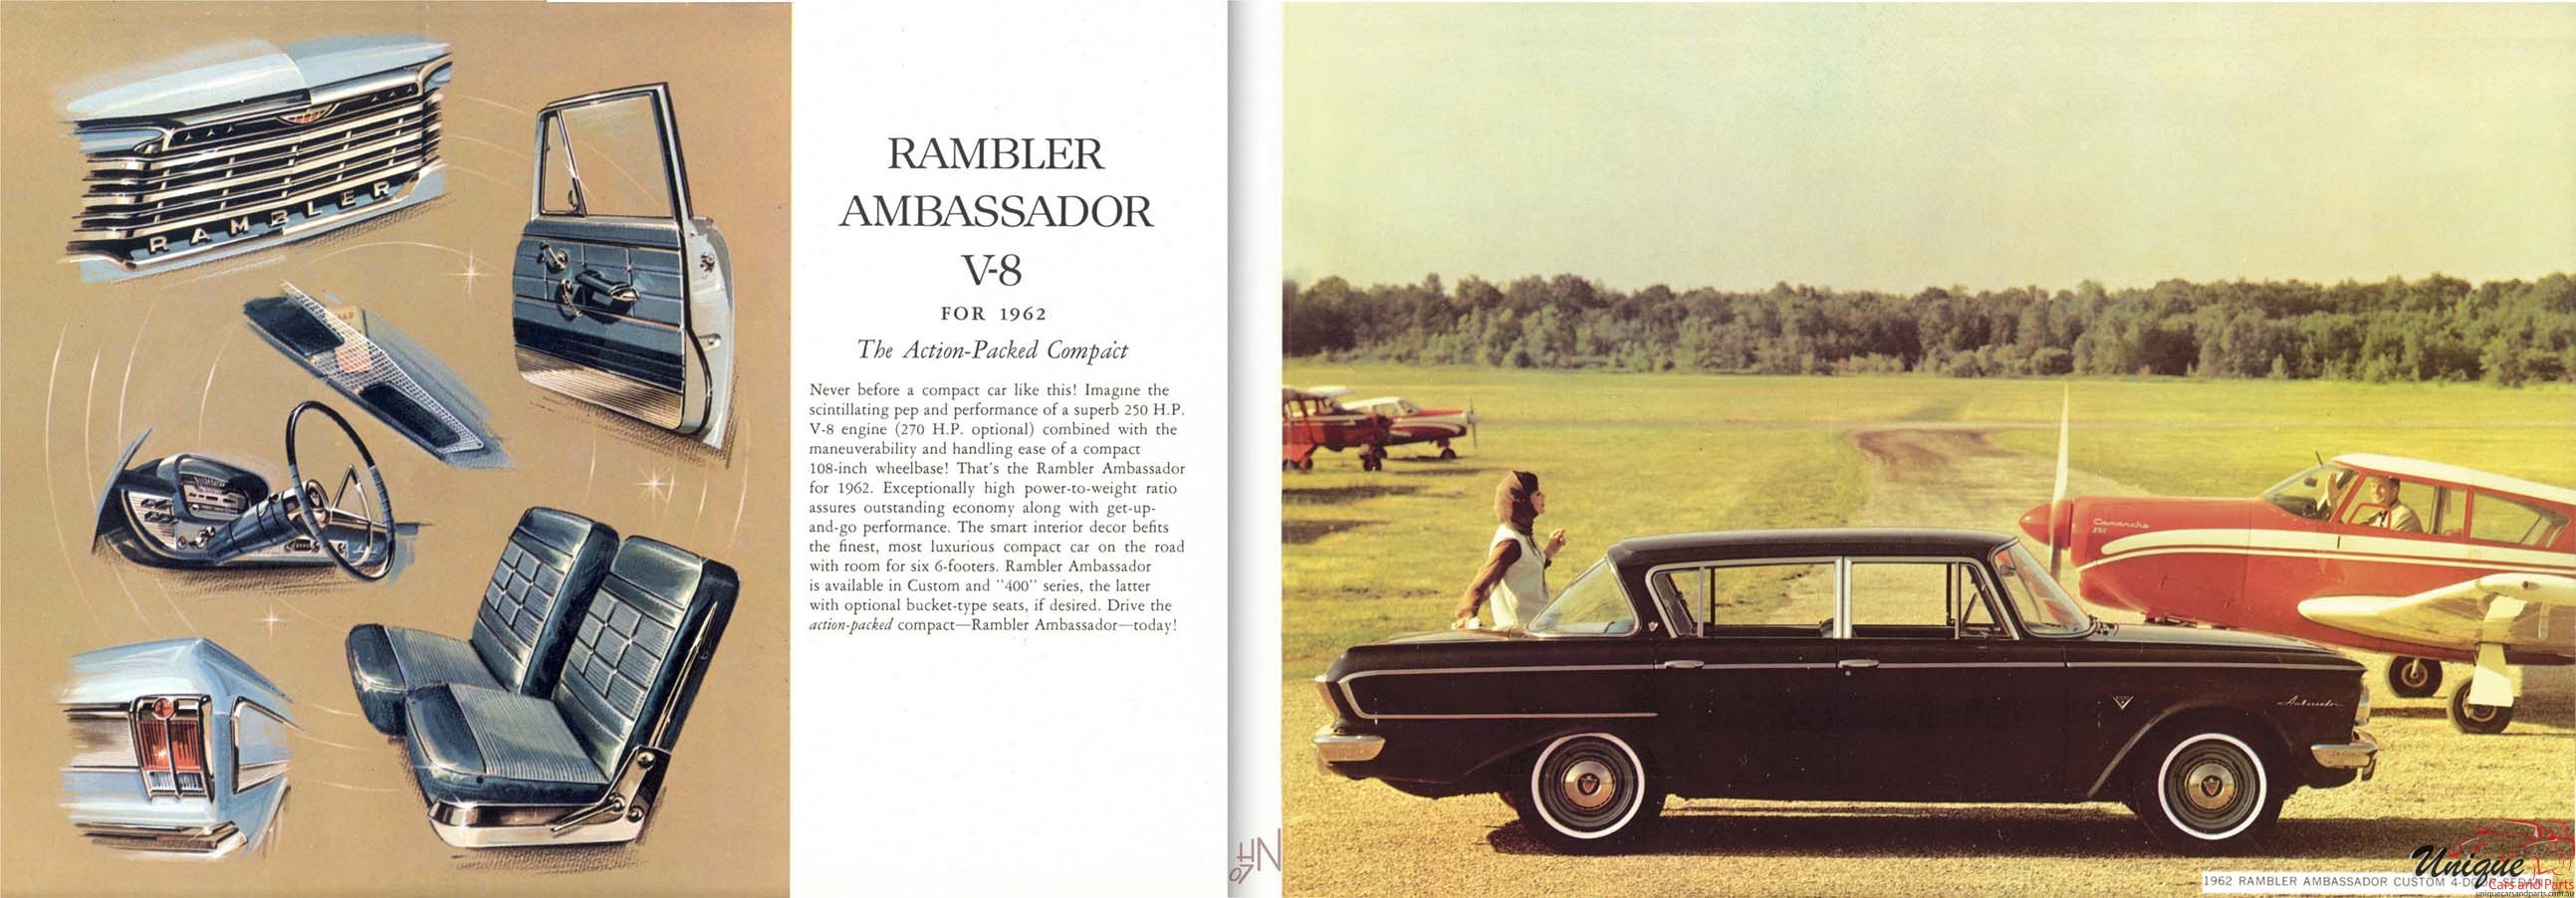 1962 AMC Rambler Brochure Page 3